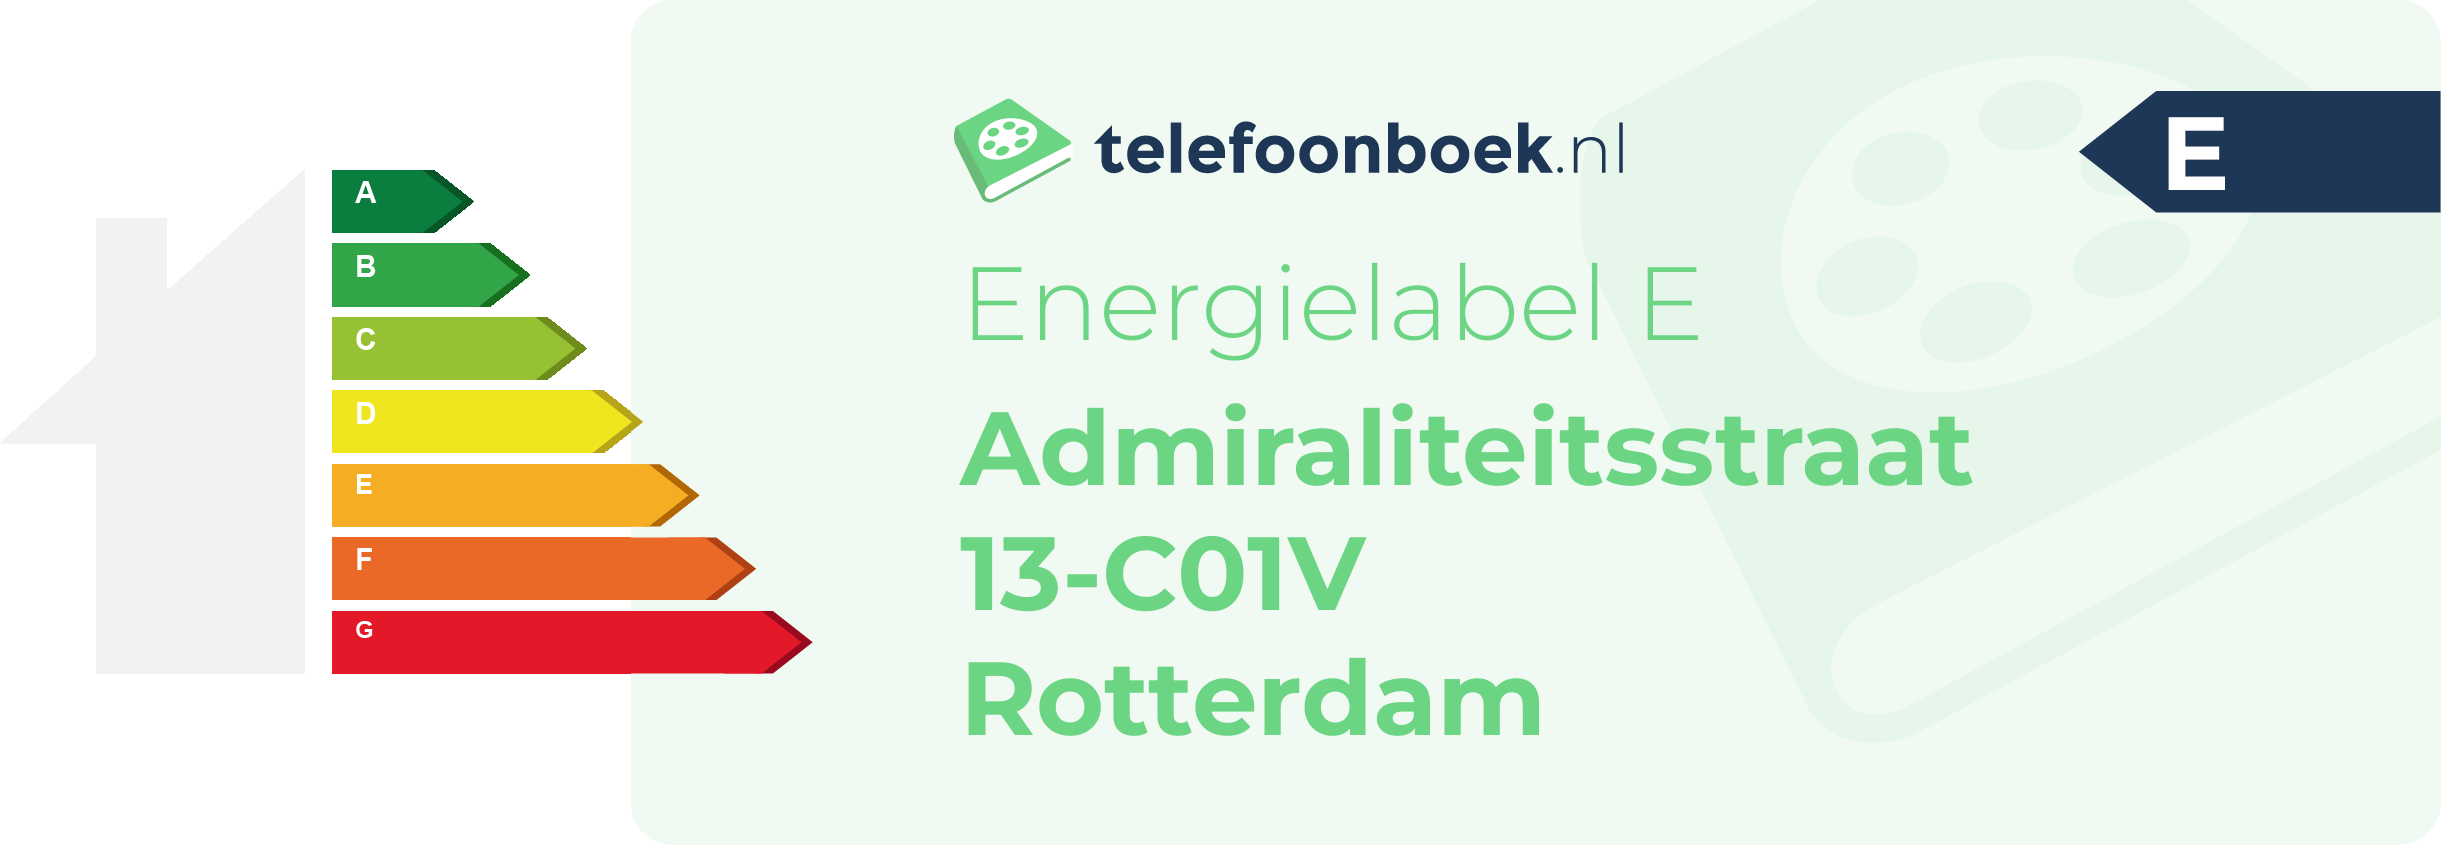 Energielabel Admiraliteitsstraat 13-C01V Rotterdam